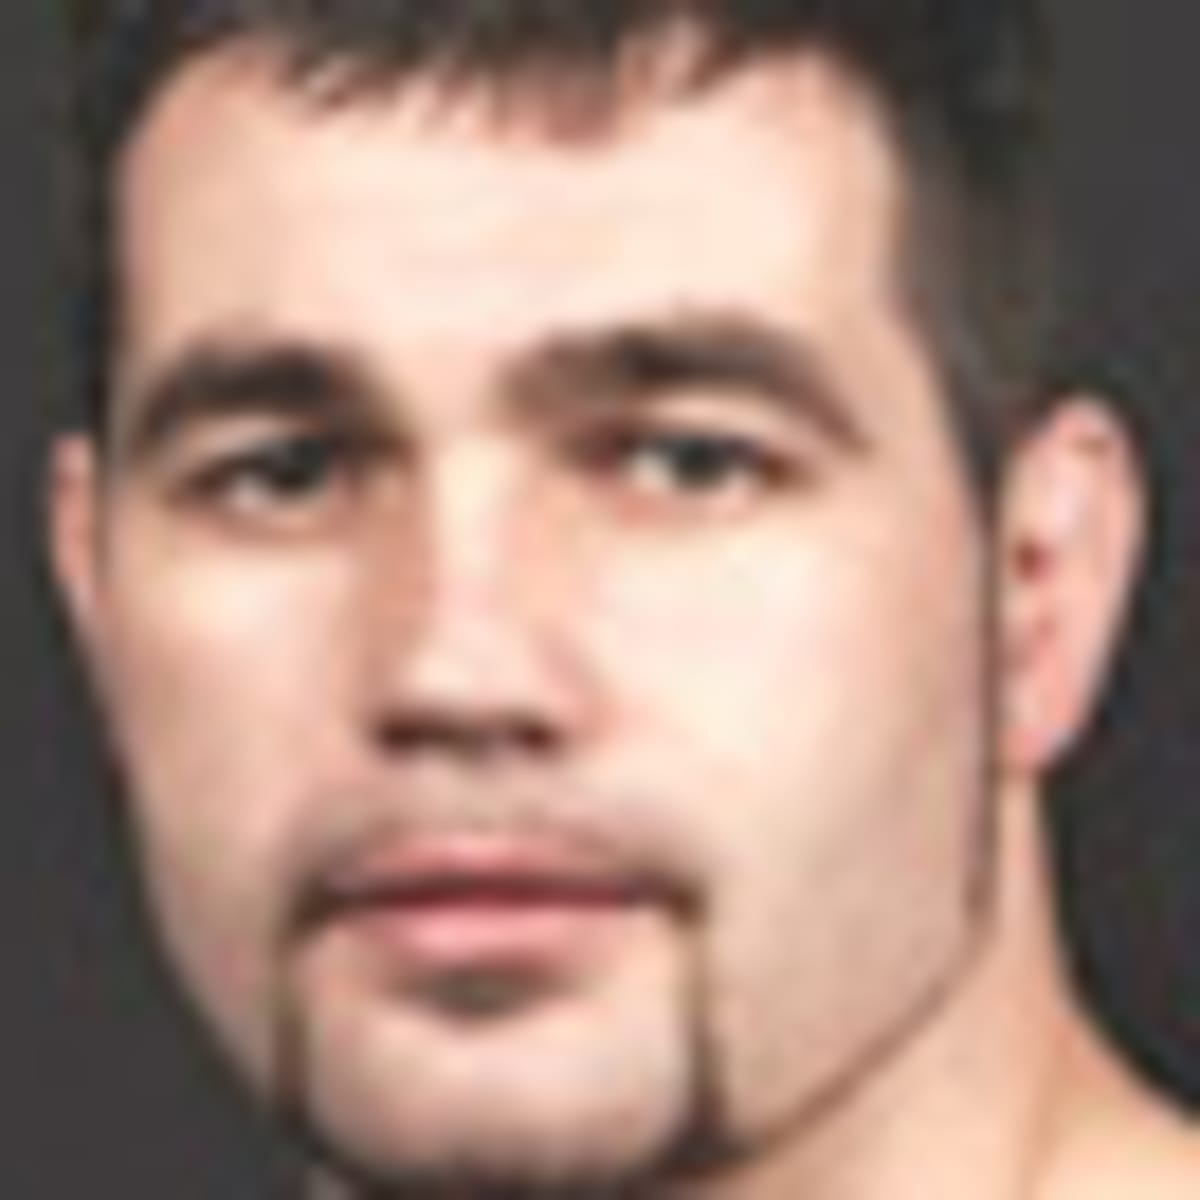 Welterweights Mark Scanlon vs. James Head added to UFC 138 in